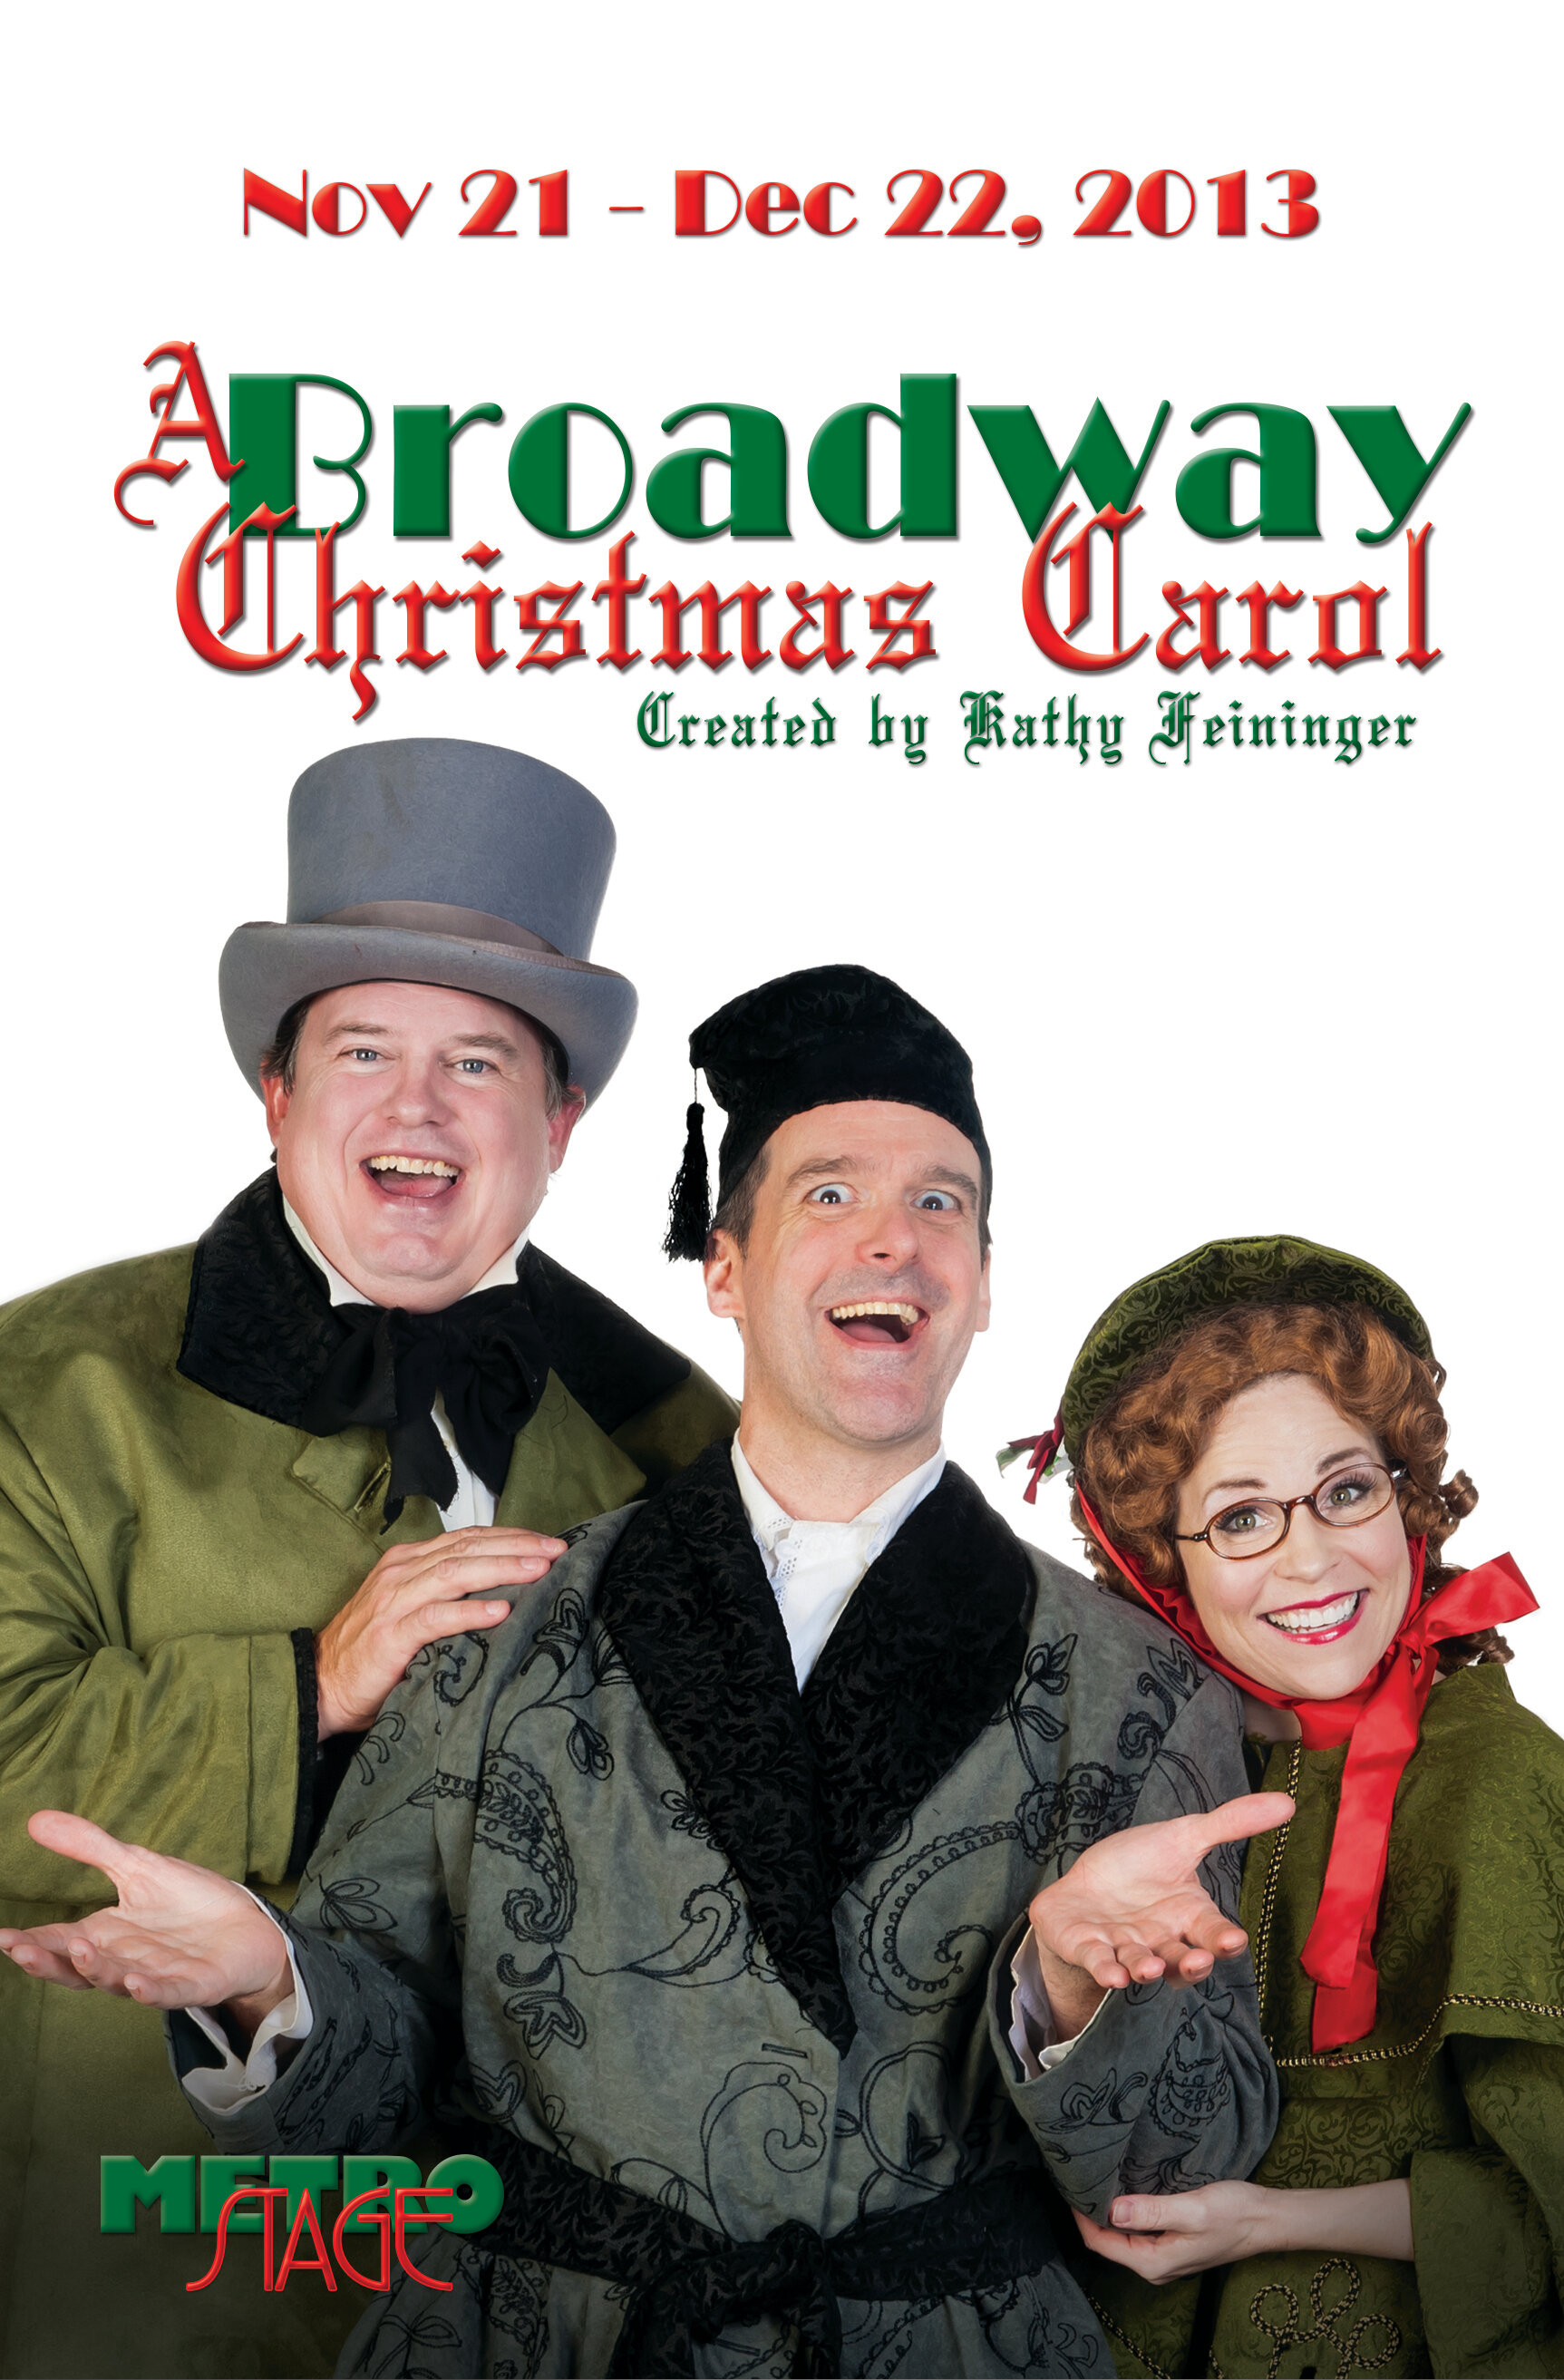 A Broadway Christmas Carol.jpeg